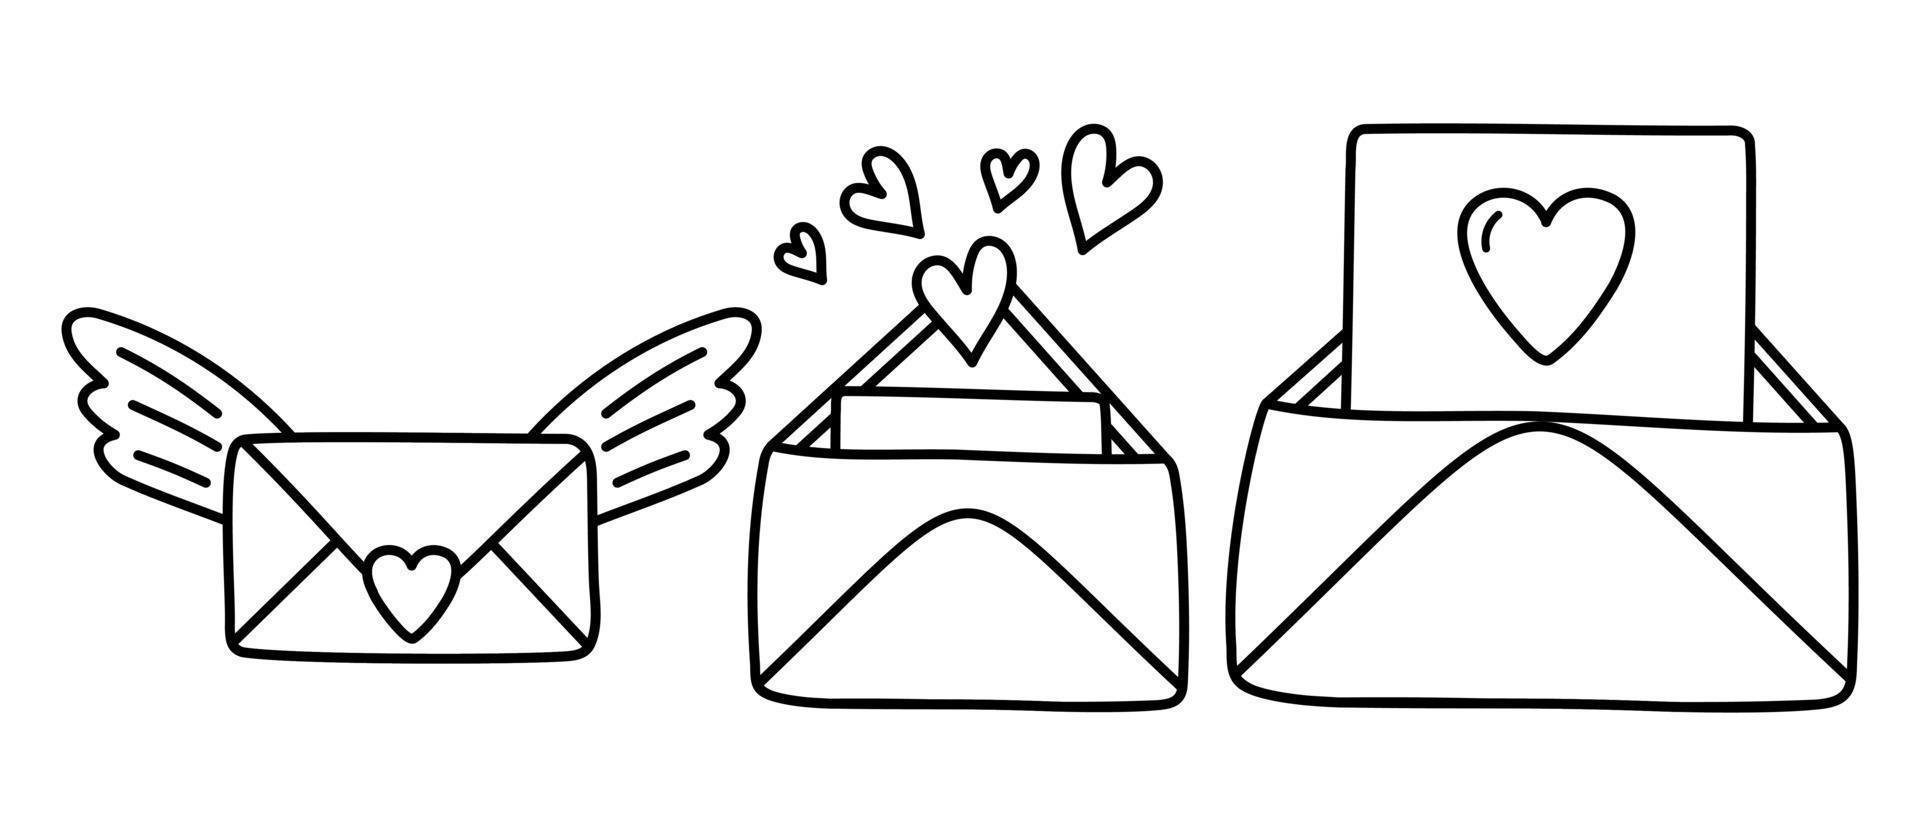 lindas cartas de amor de garabatos, sobre con corazón. ilustración vectorial dibujada a mano vector